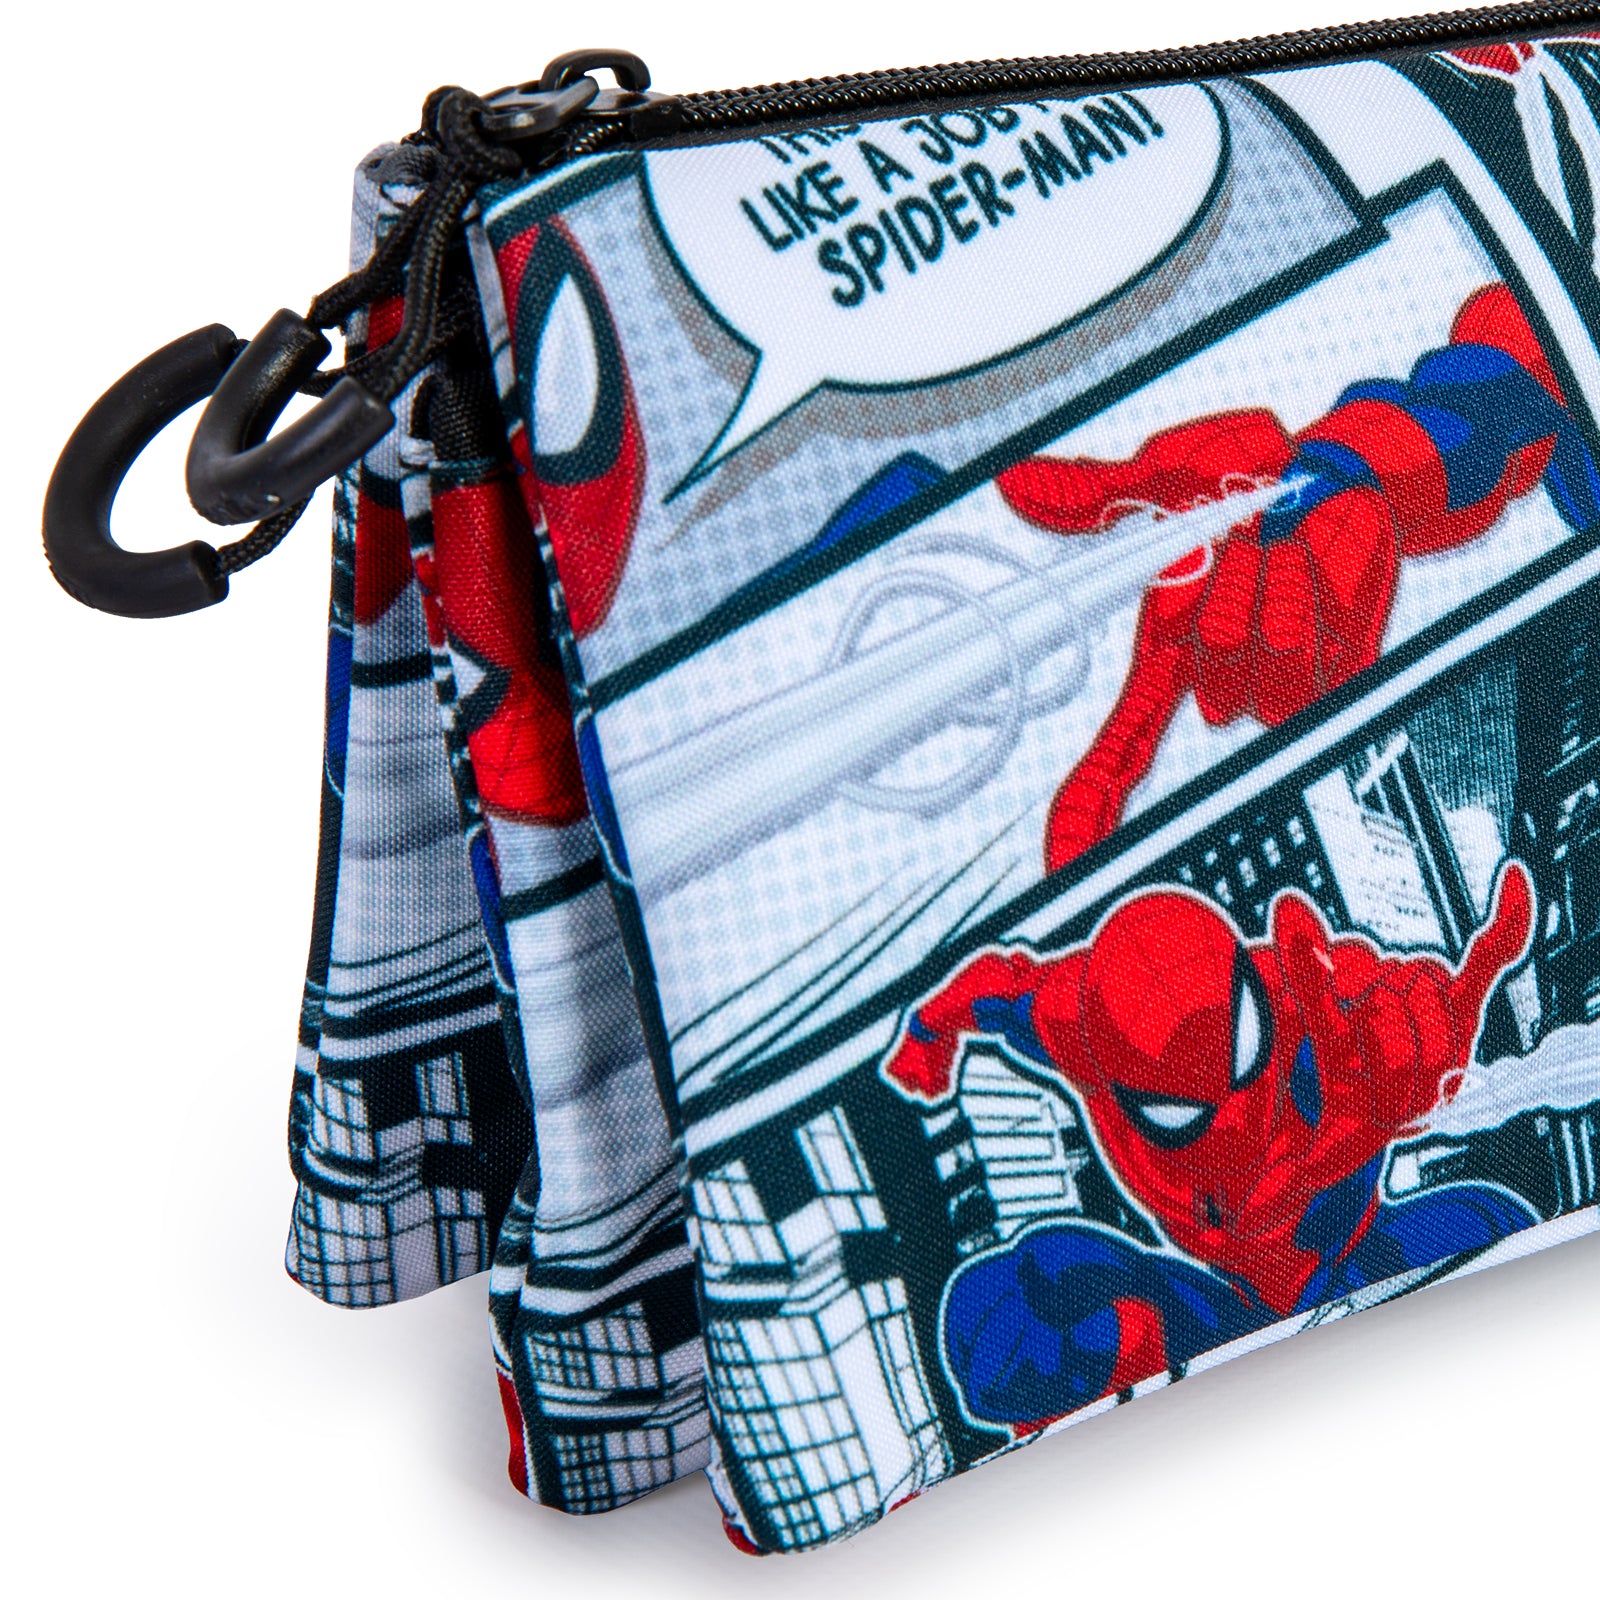 ColePack Spiderman - Estuche Triple de 2 Cremalleras con Material Escolar. Stories